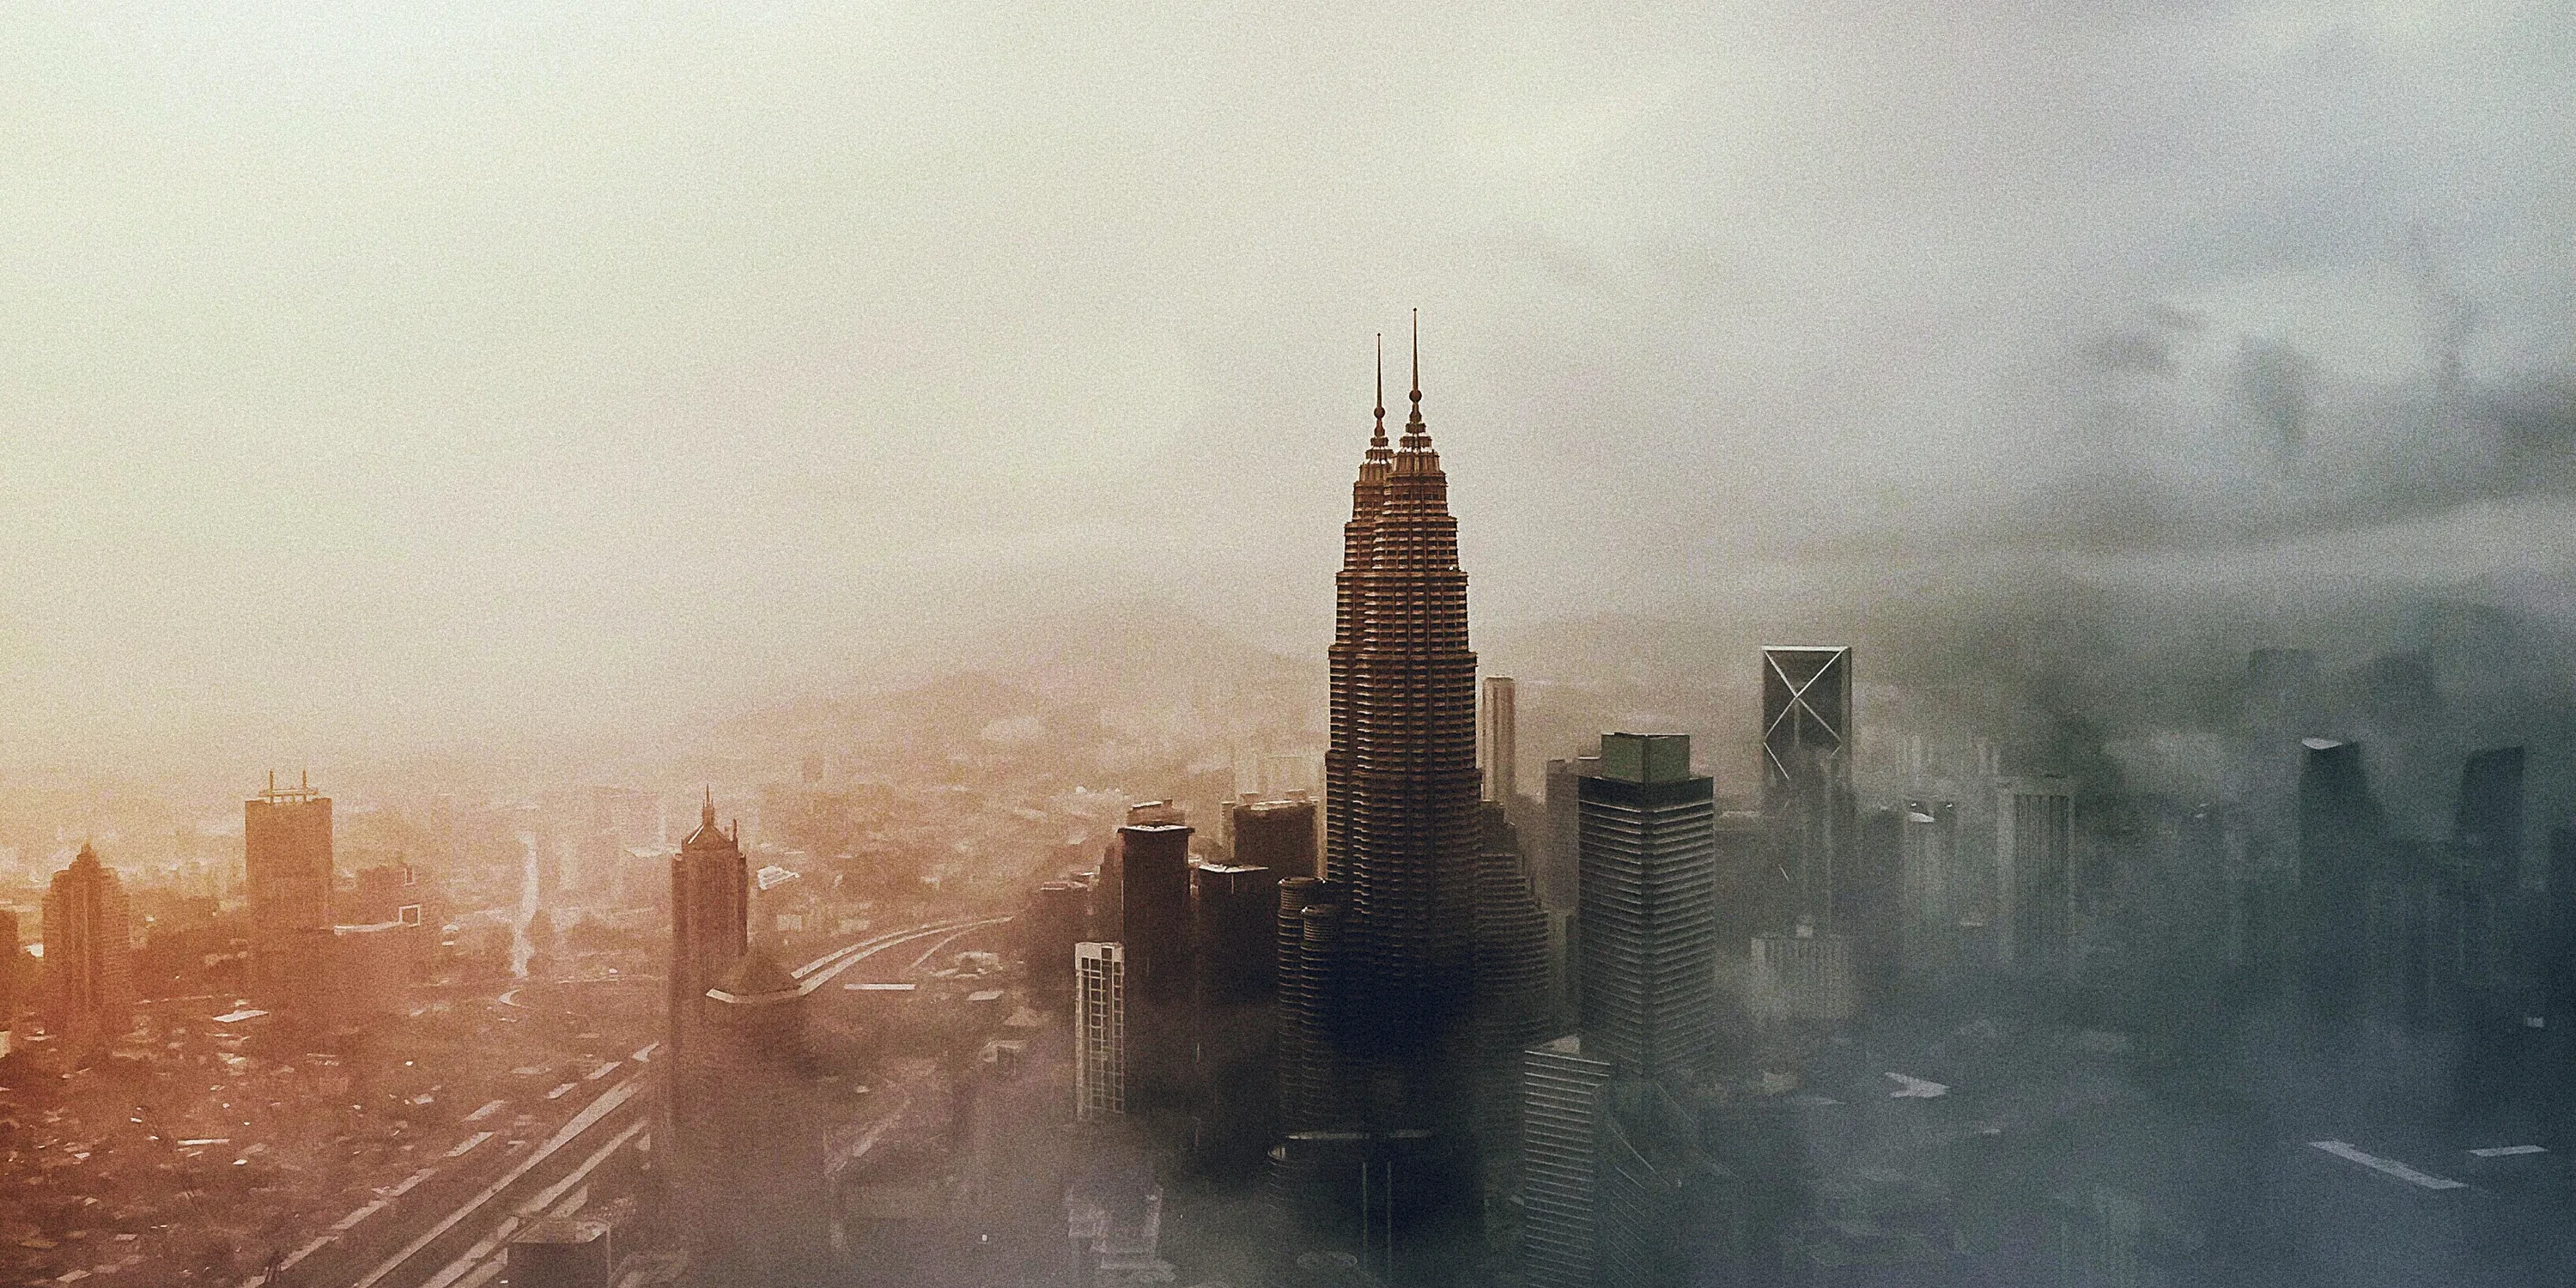 Malaysia's skyline featuring Kuala Lumpur Twin Towers